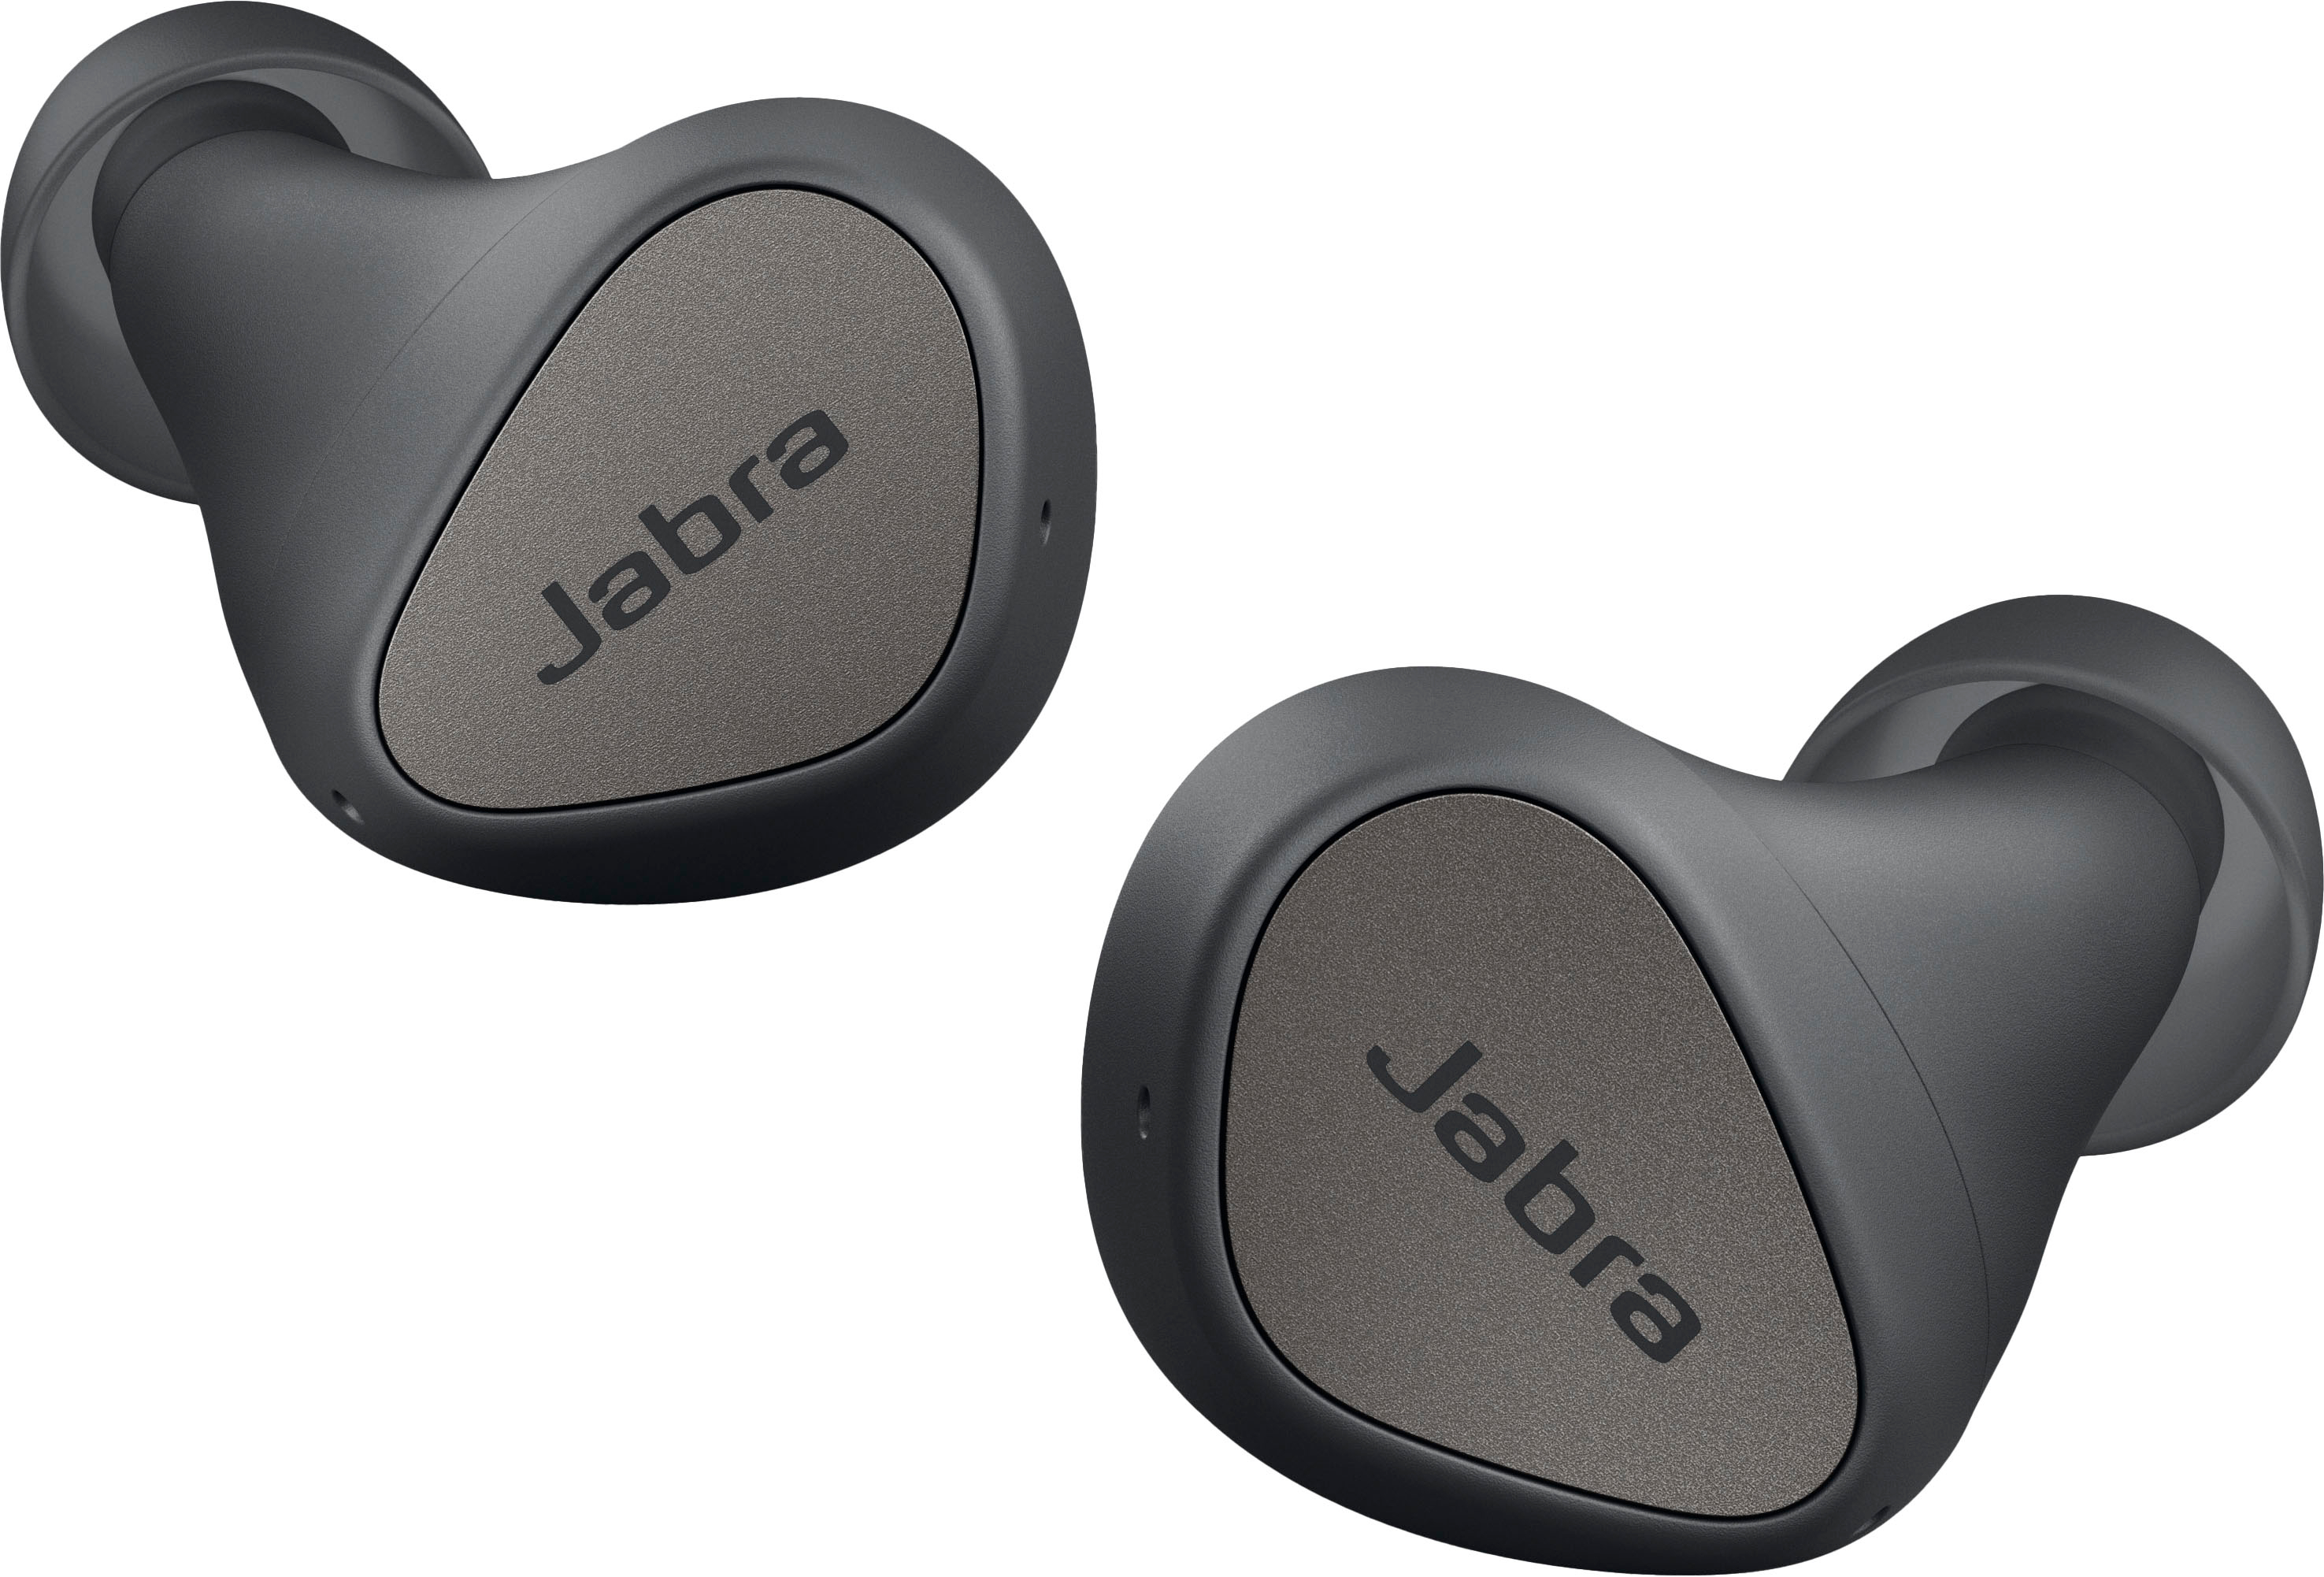 Jabra Elite 4 True Wireless Earbuds - 21340722